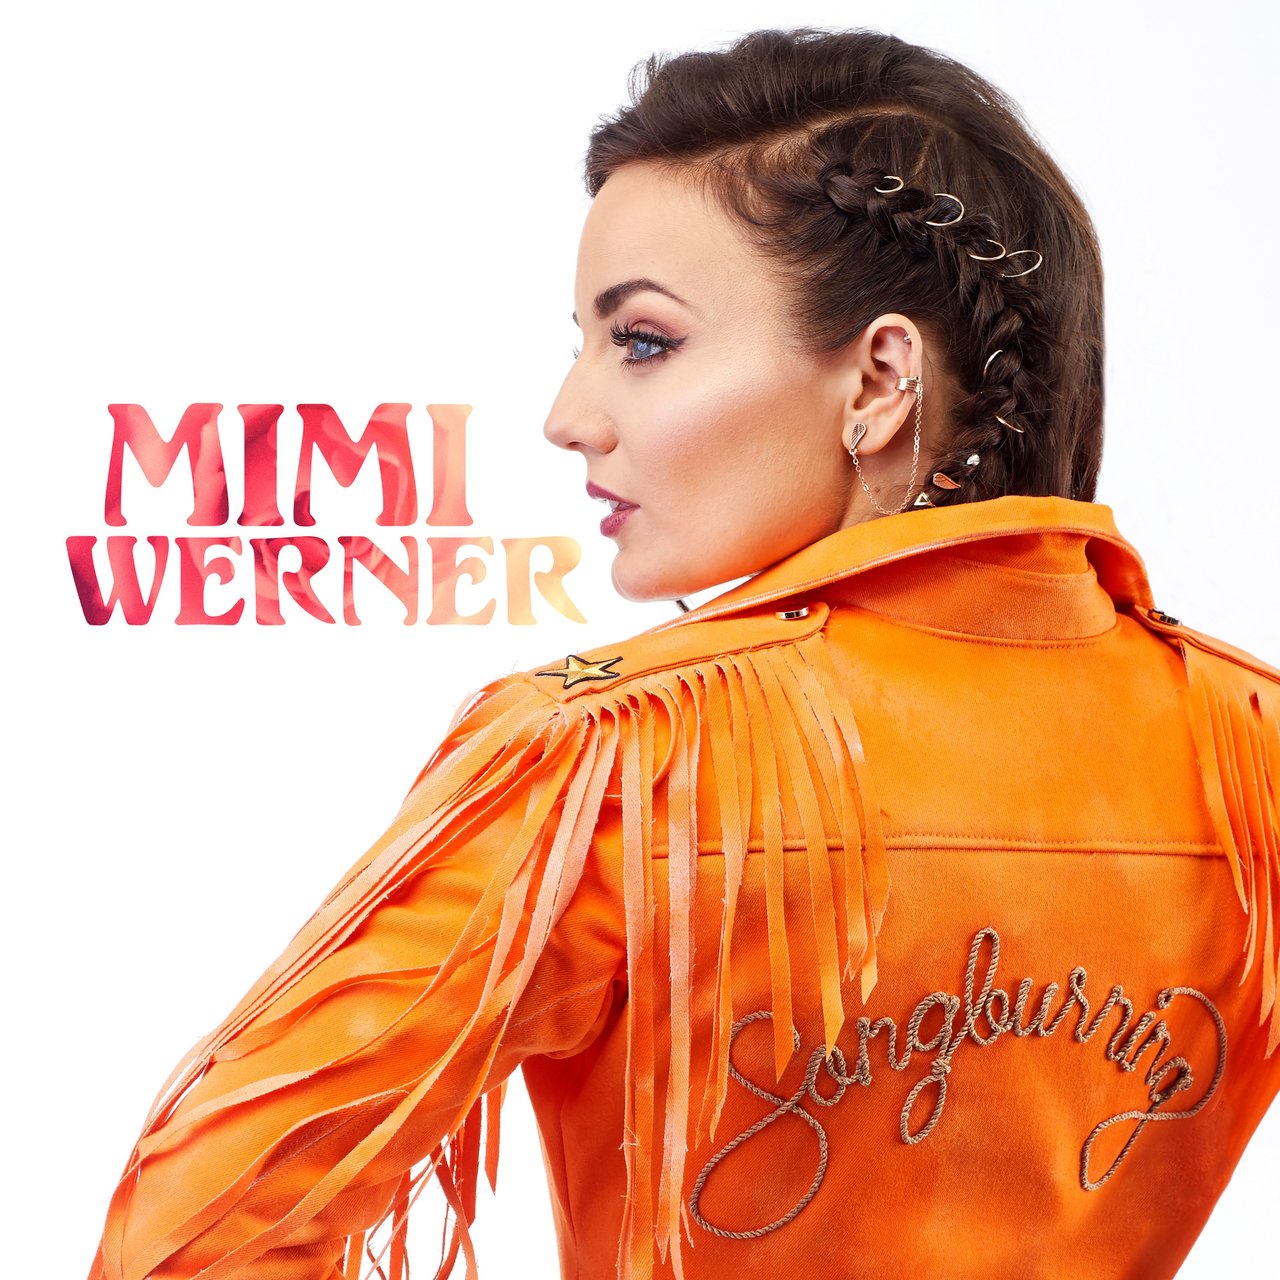 Mimi Werner — Songburning cover artwork